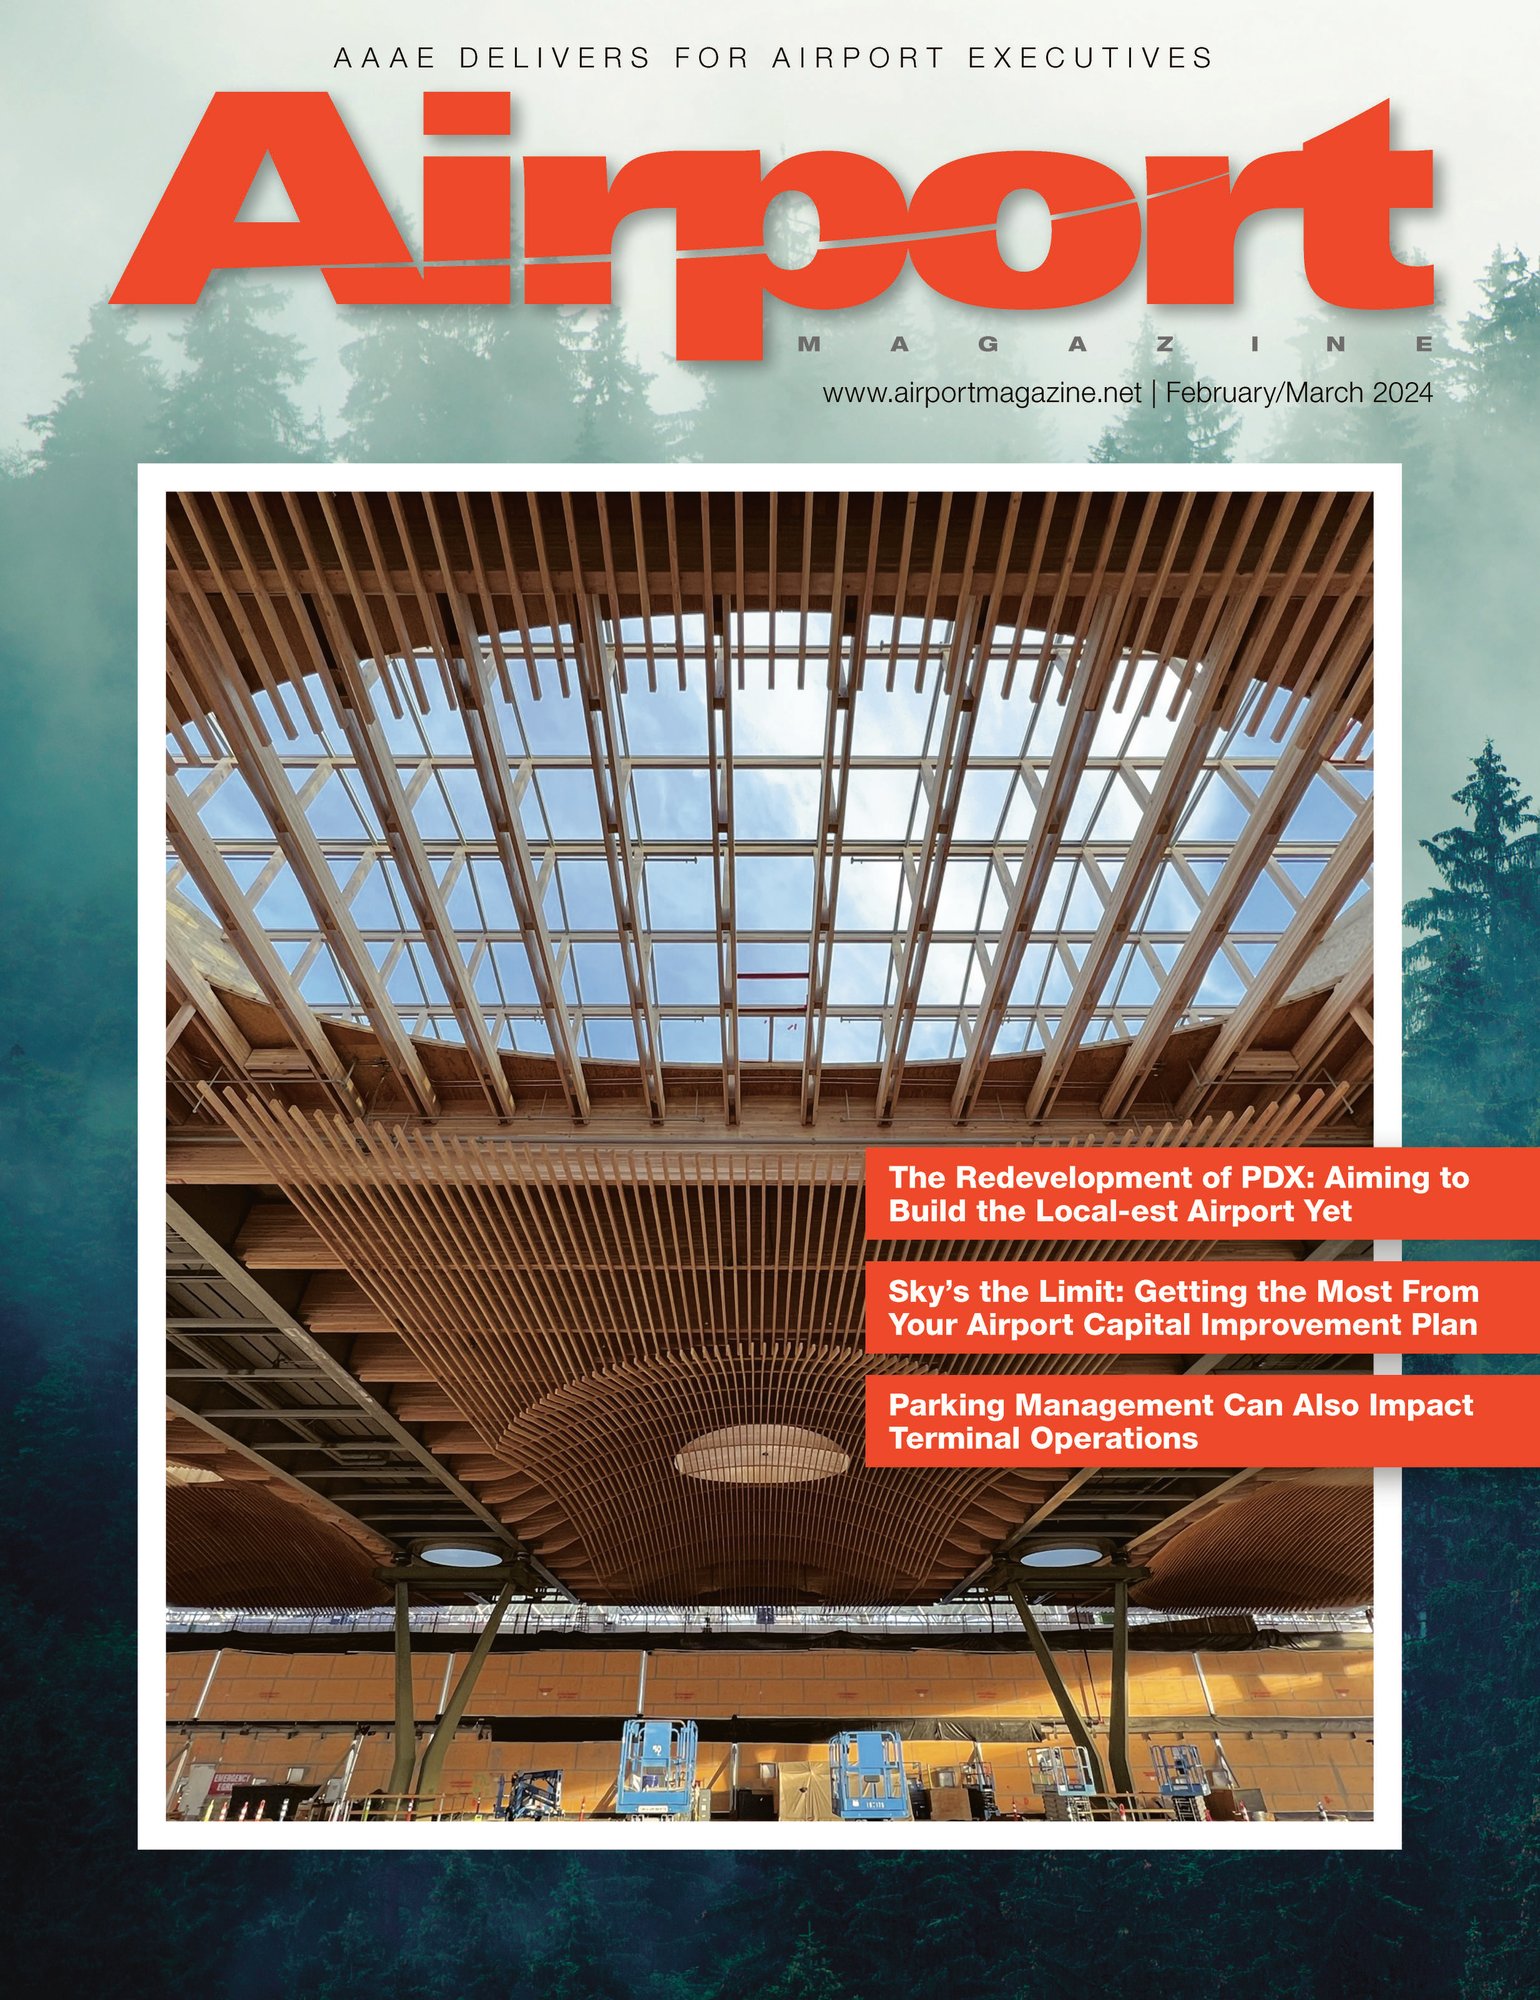 Aiirport_FebMar_cover